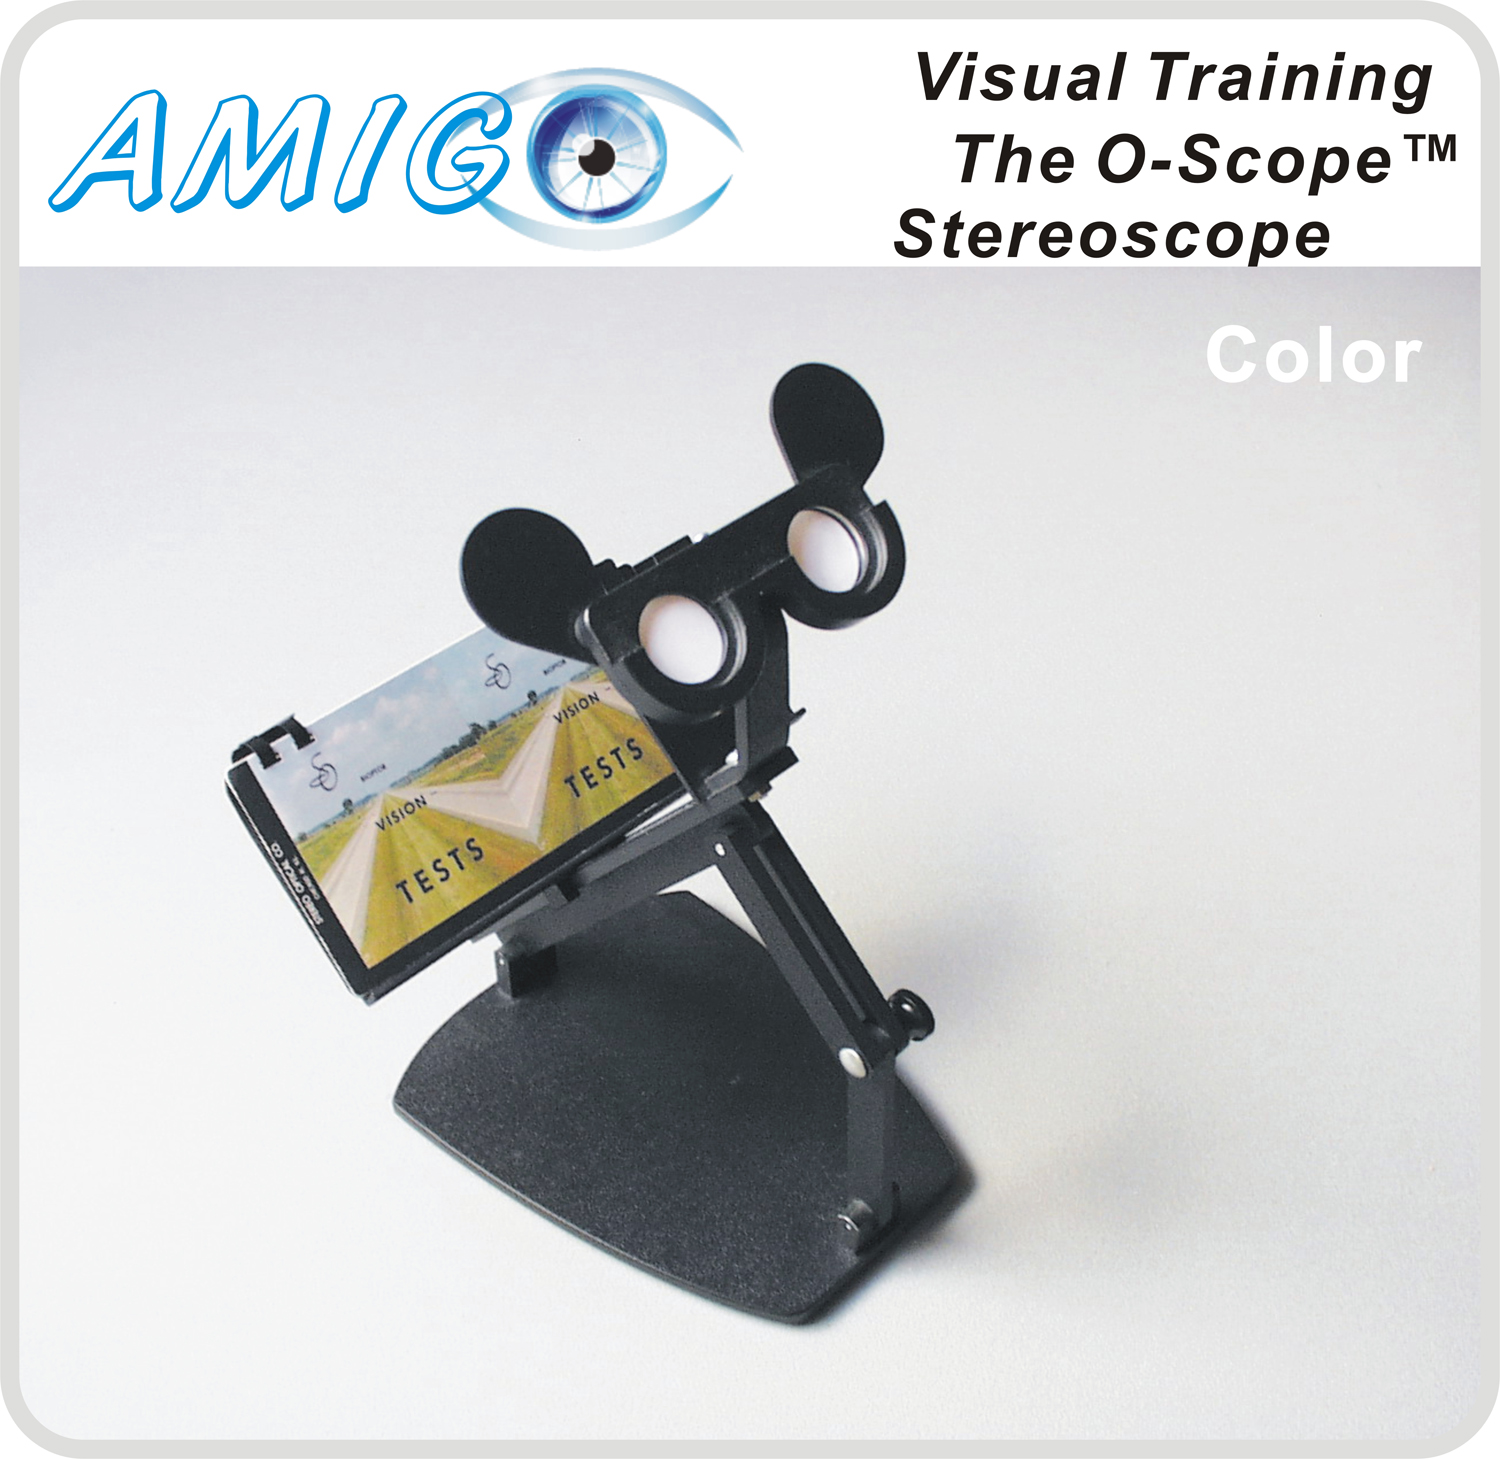 The O-Scope Stereoscope - color